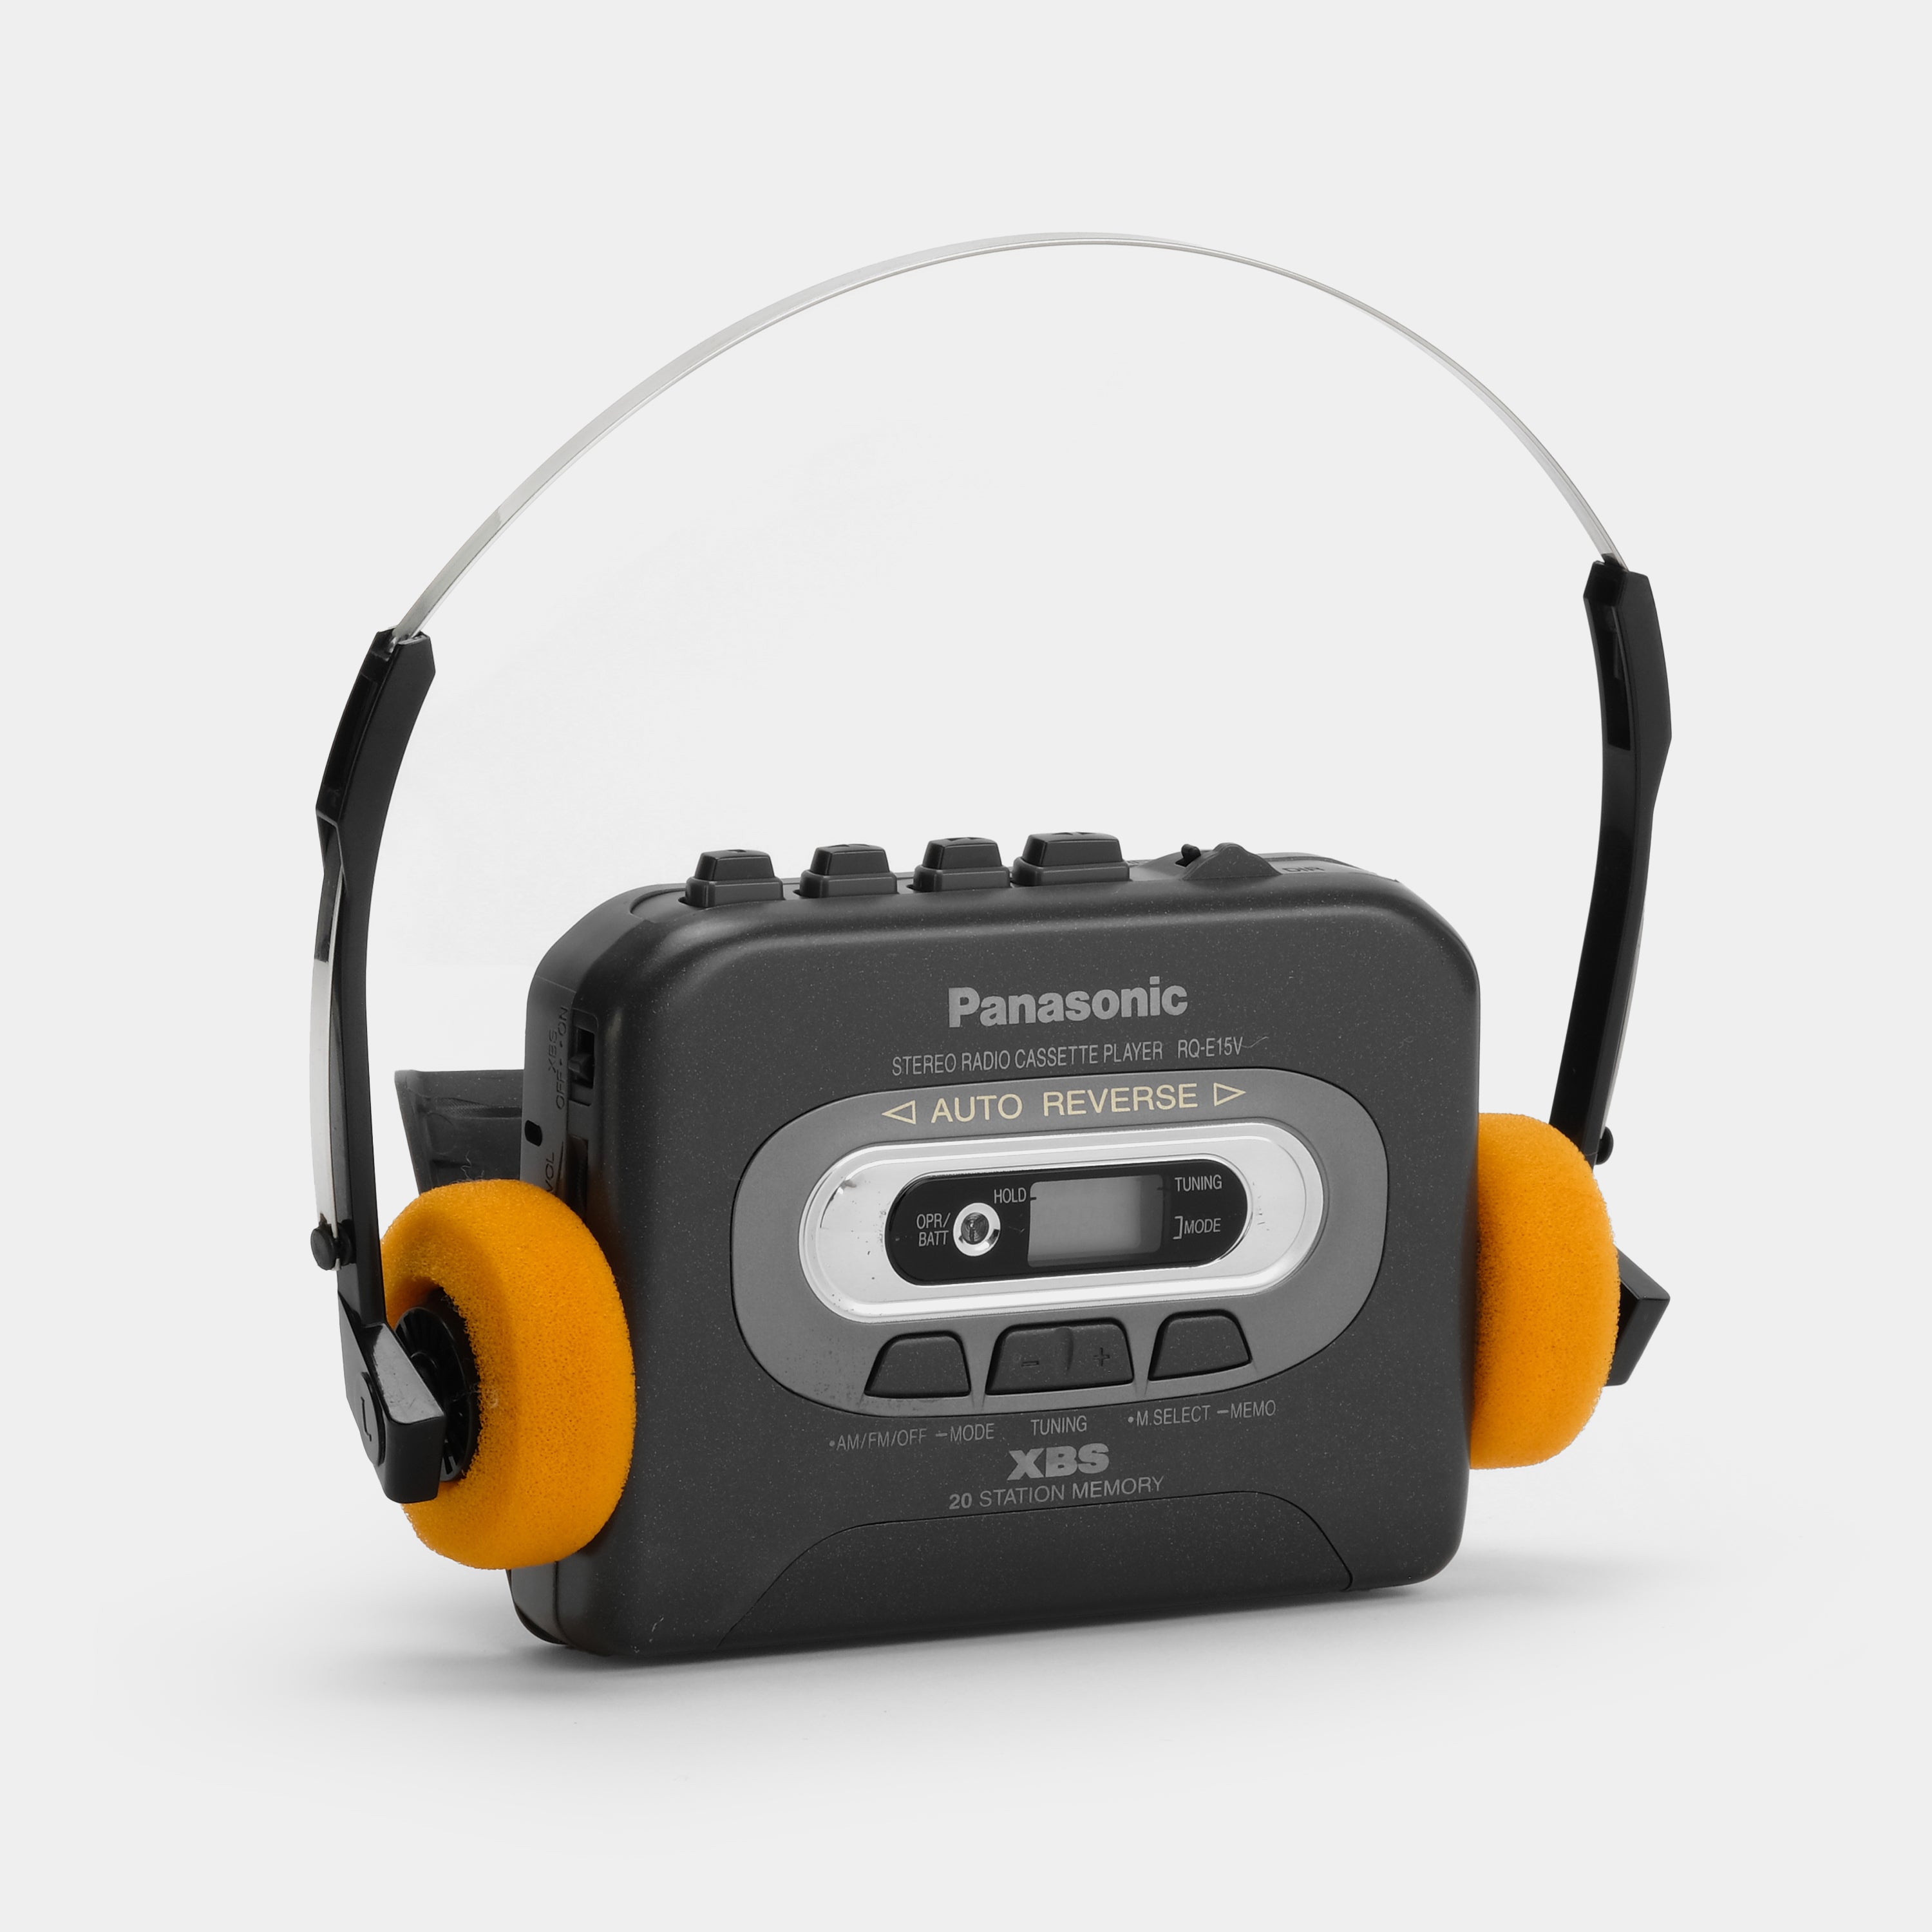 Panasonic RQ-E15V Portable Stereo Cassette Player